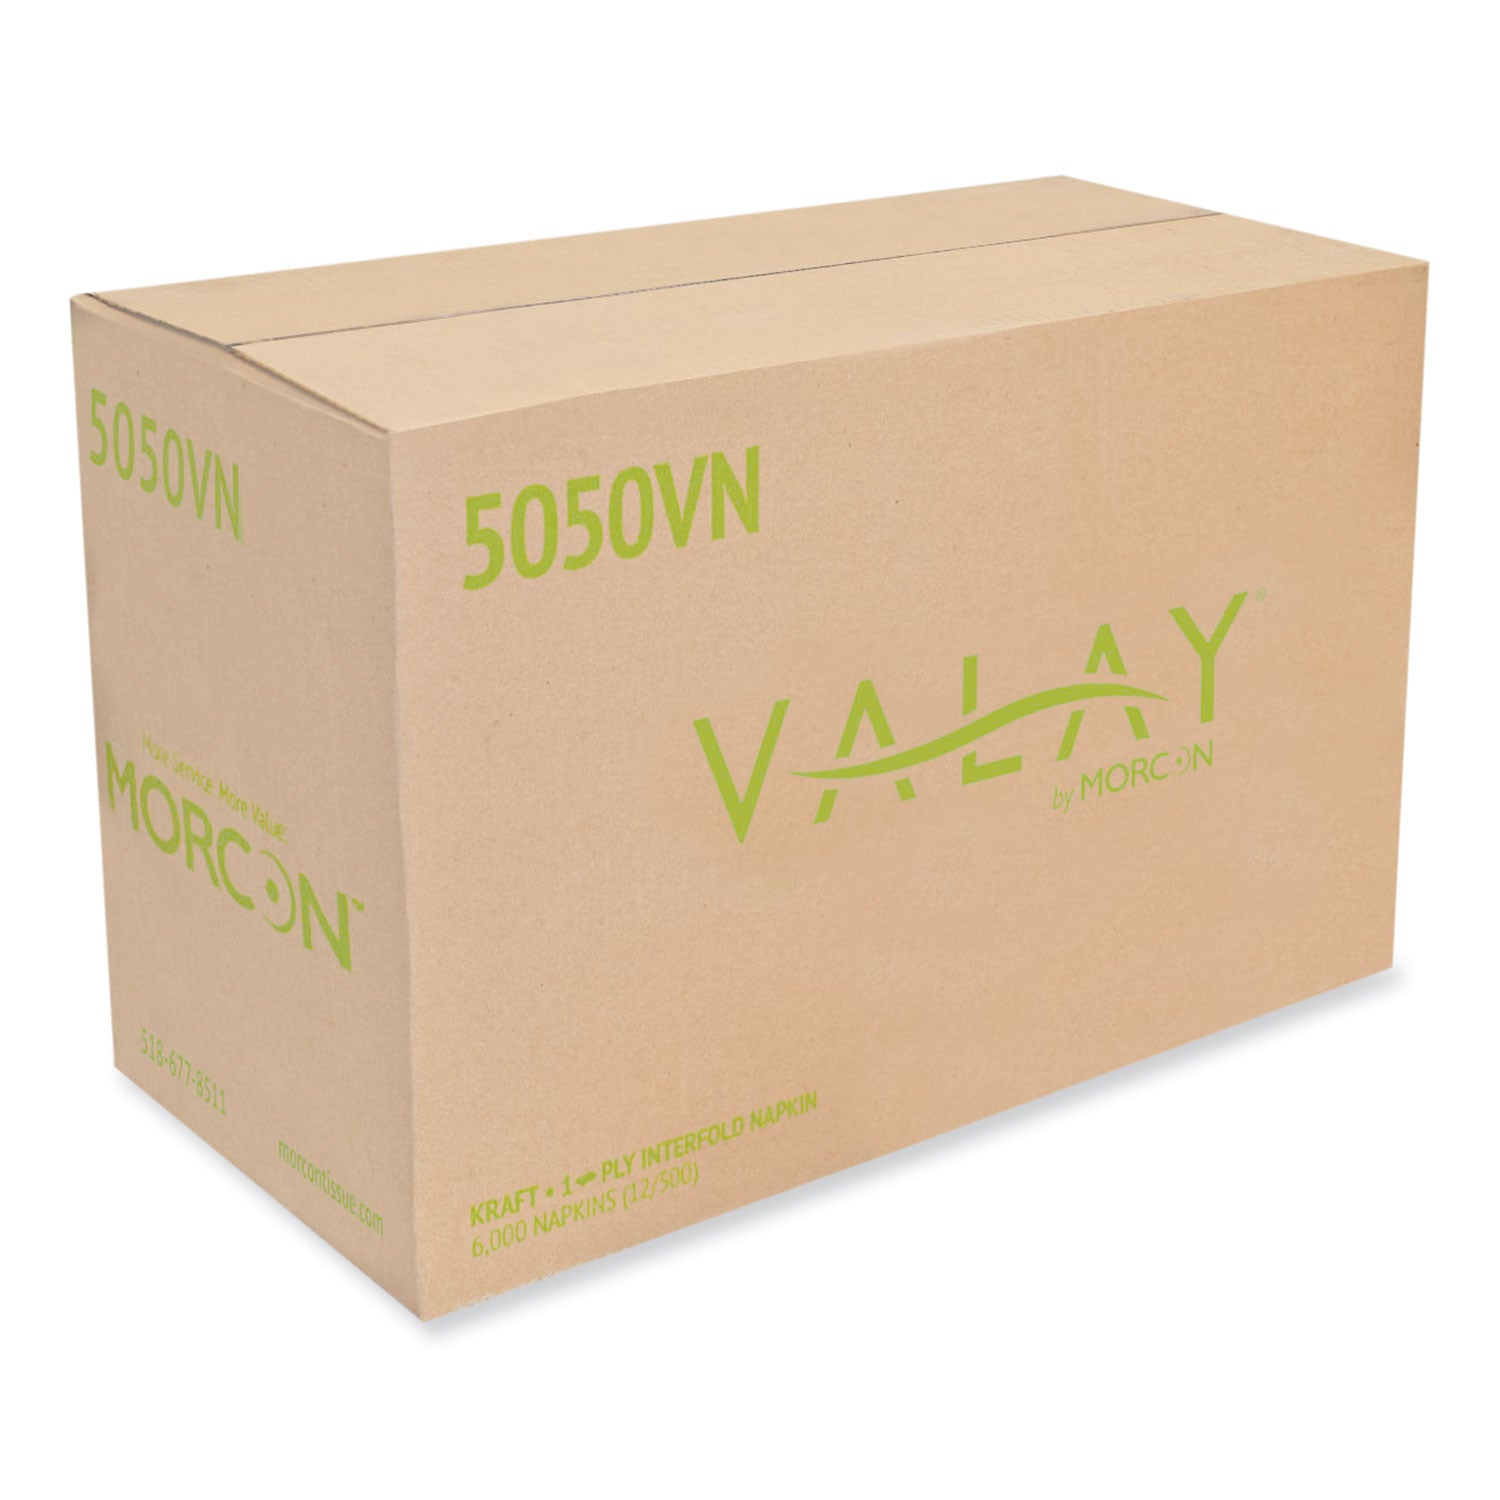 valay-interfolded-napkins-1-ply-63-x-885-kraft-6000-carton_mor5050vn - 2